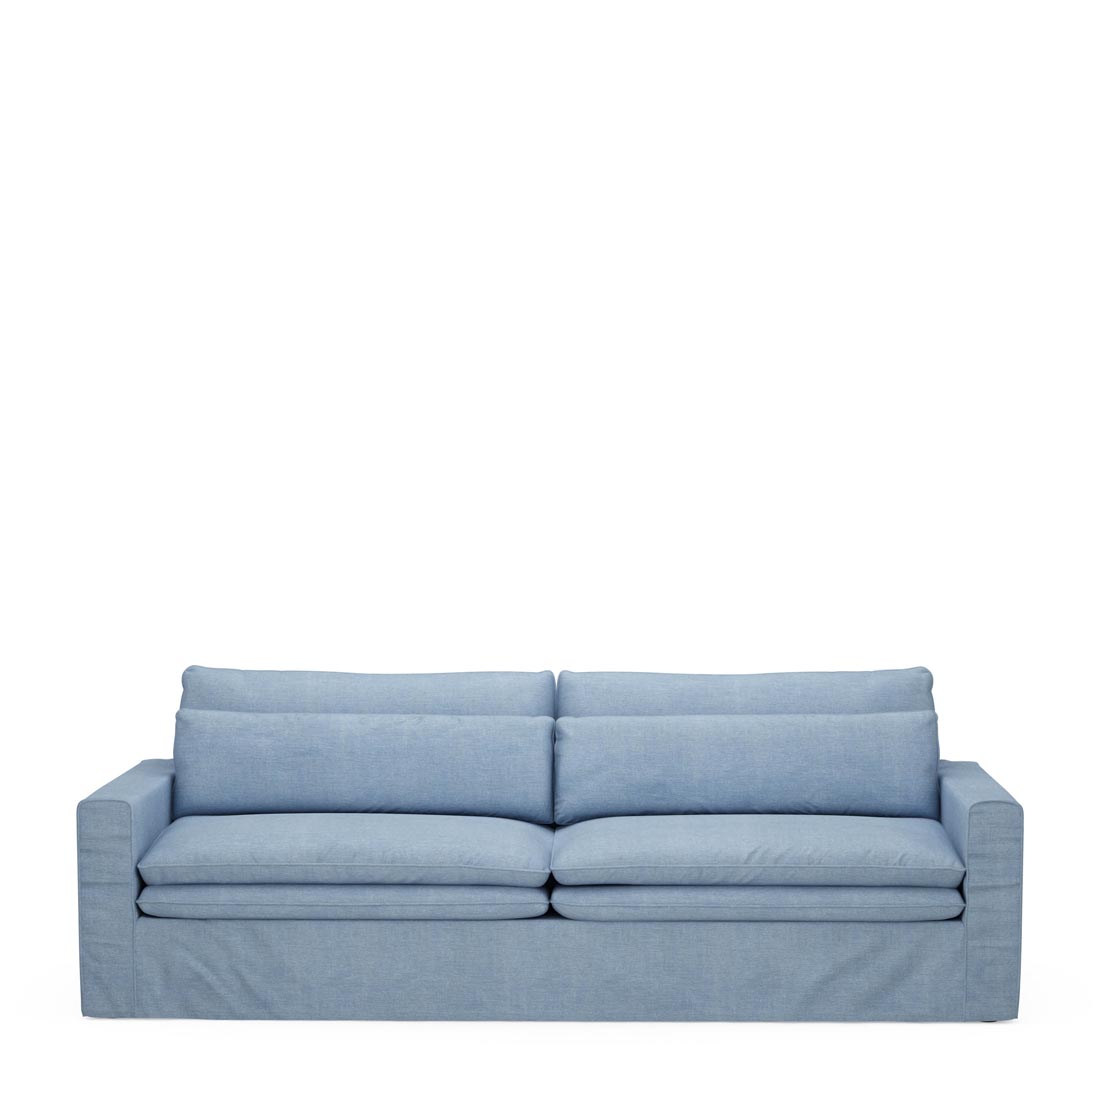 Rivièra Maison - Continental Sofa 3,5 Seater, washed cotton, ice blue - Kleur: Ijs Blauw